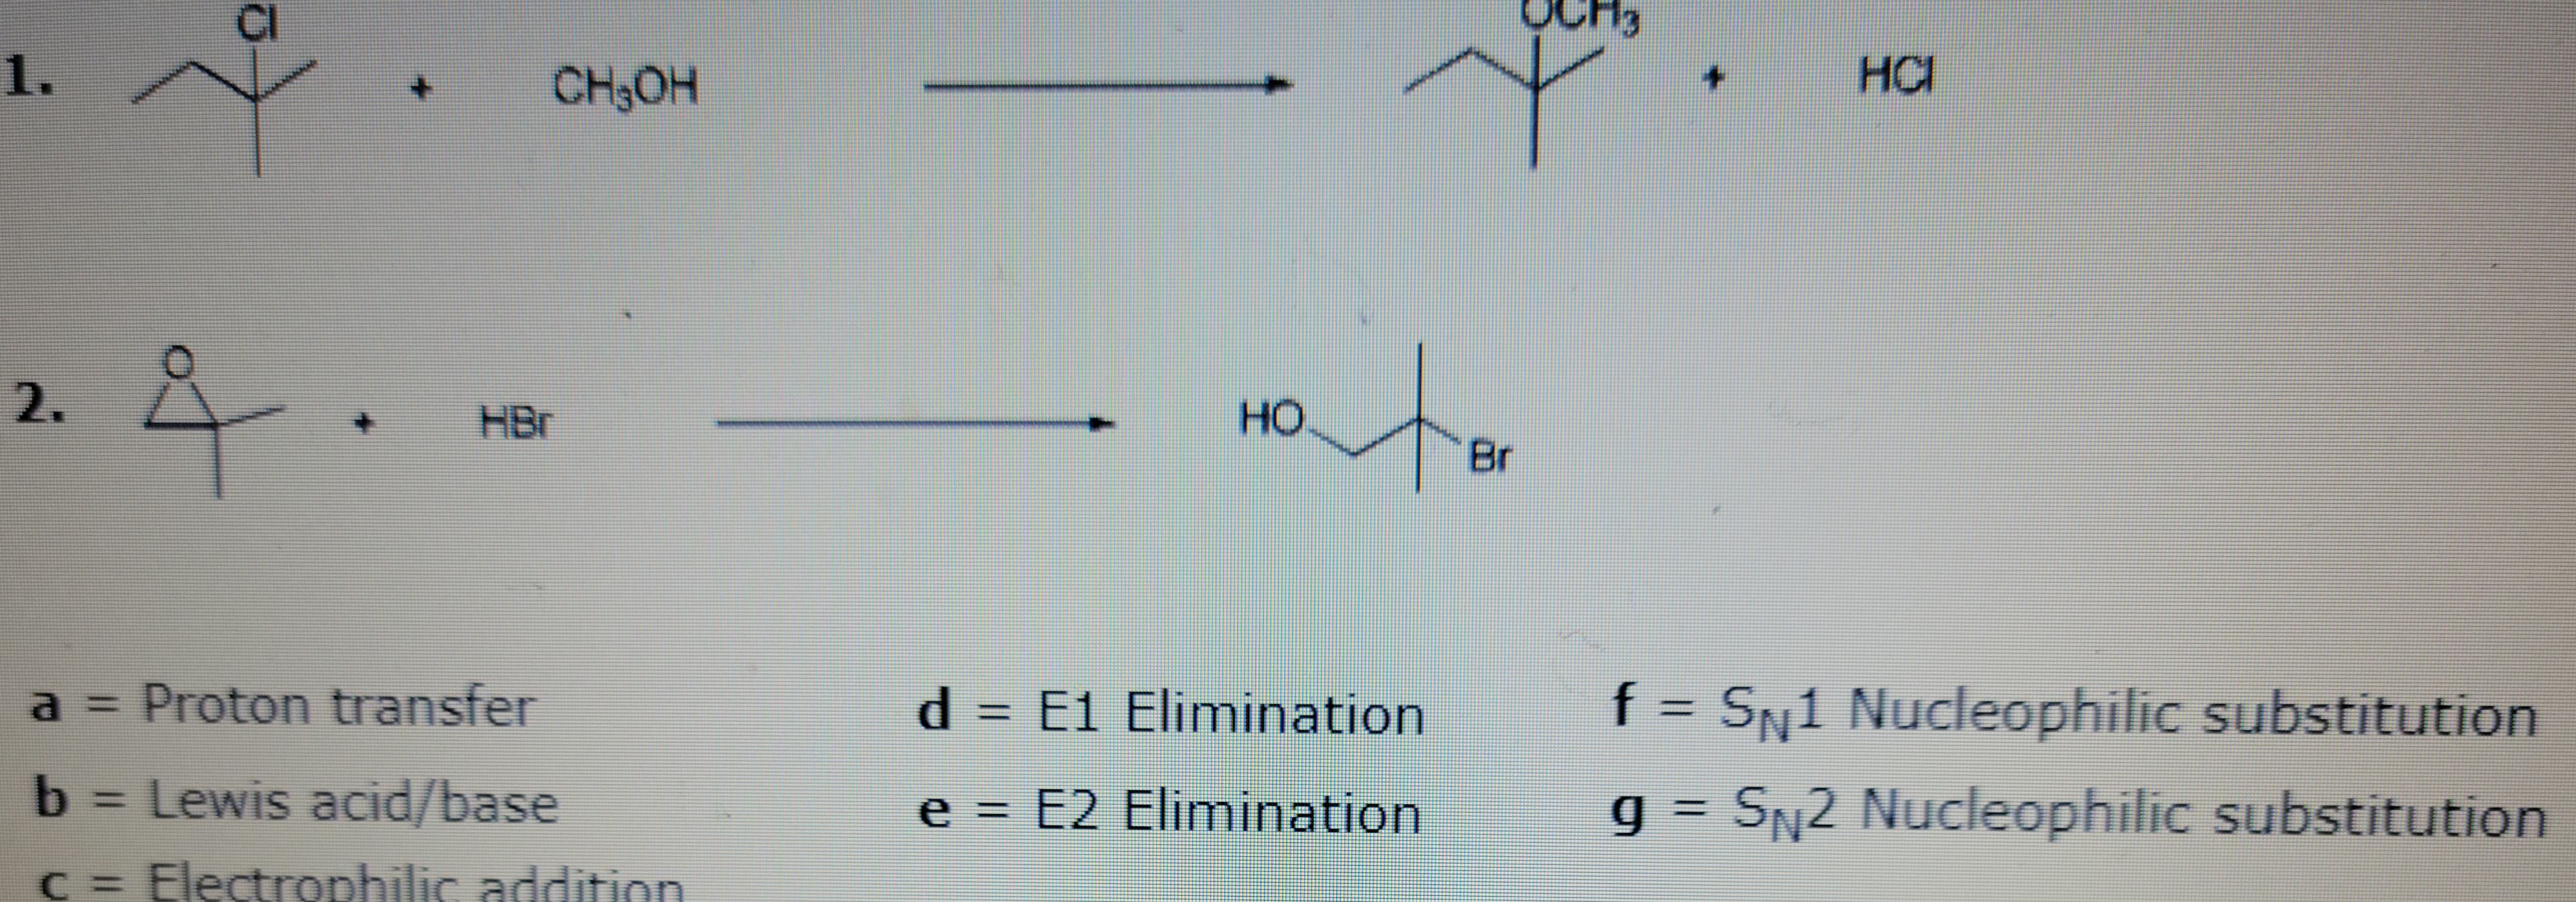 1.
2.
CI
4
+
CH₂OH
a = Proton transfer
b = Lewis acid/base
c = Electrophilic addition
Ÿ
HO
ato
d = E1 Elimination
e = E2 Elimination
HCI
f = SN1 Nucleophilic substitution
g=
SN2 Nucleophilic substitution